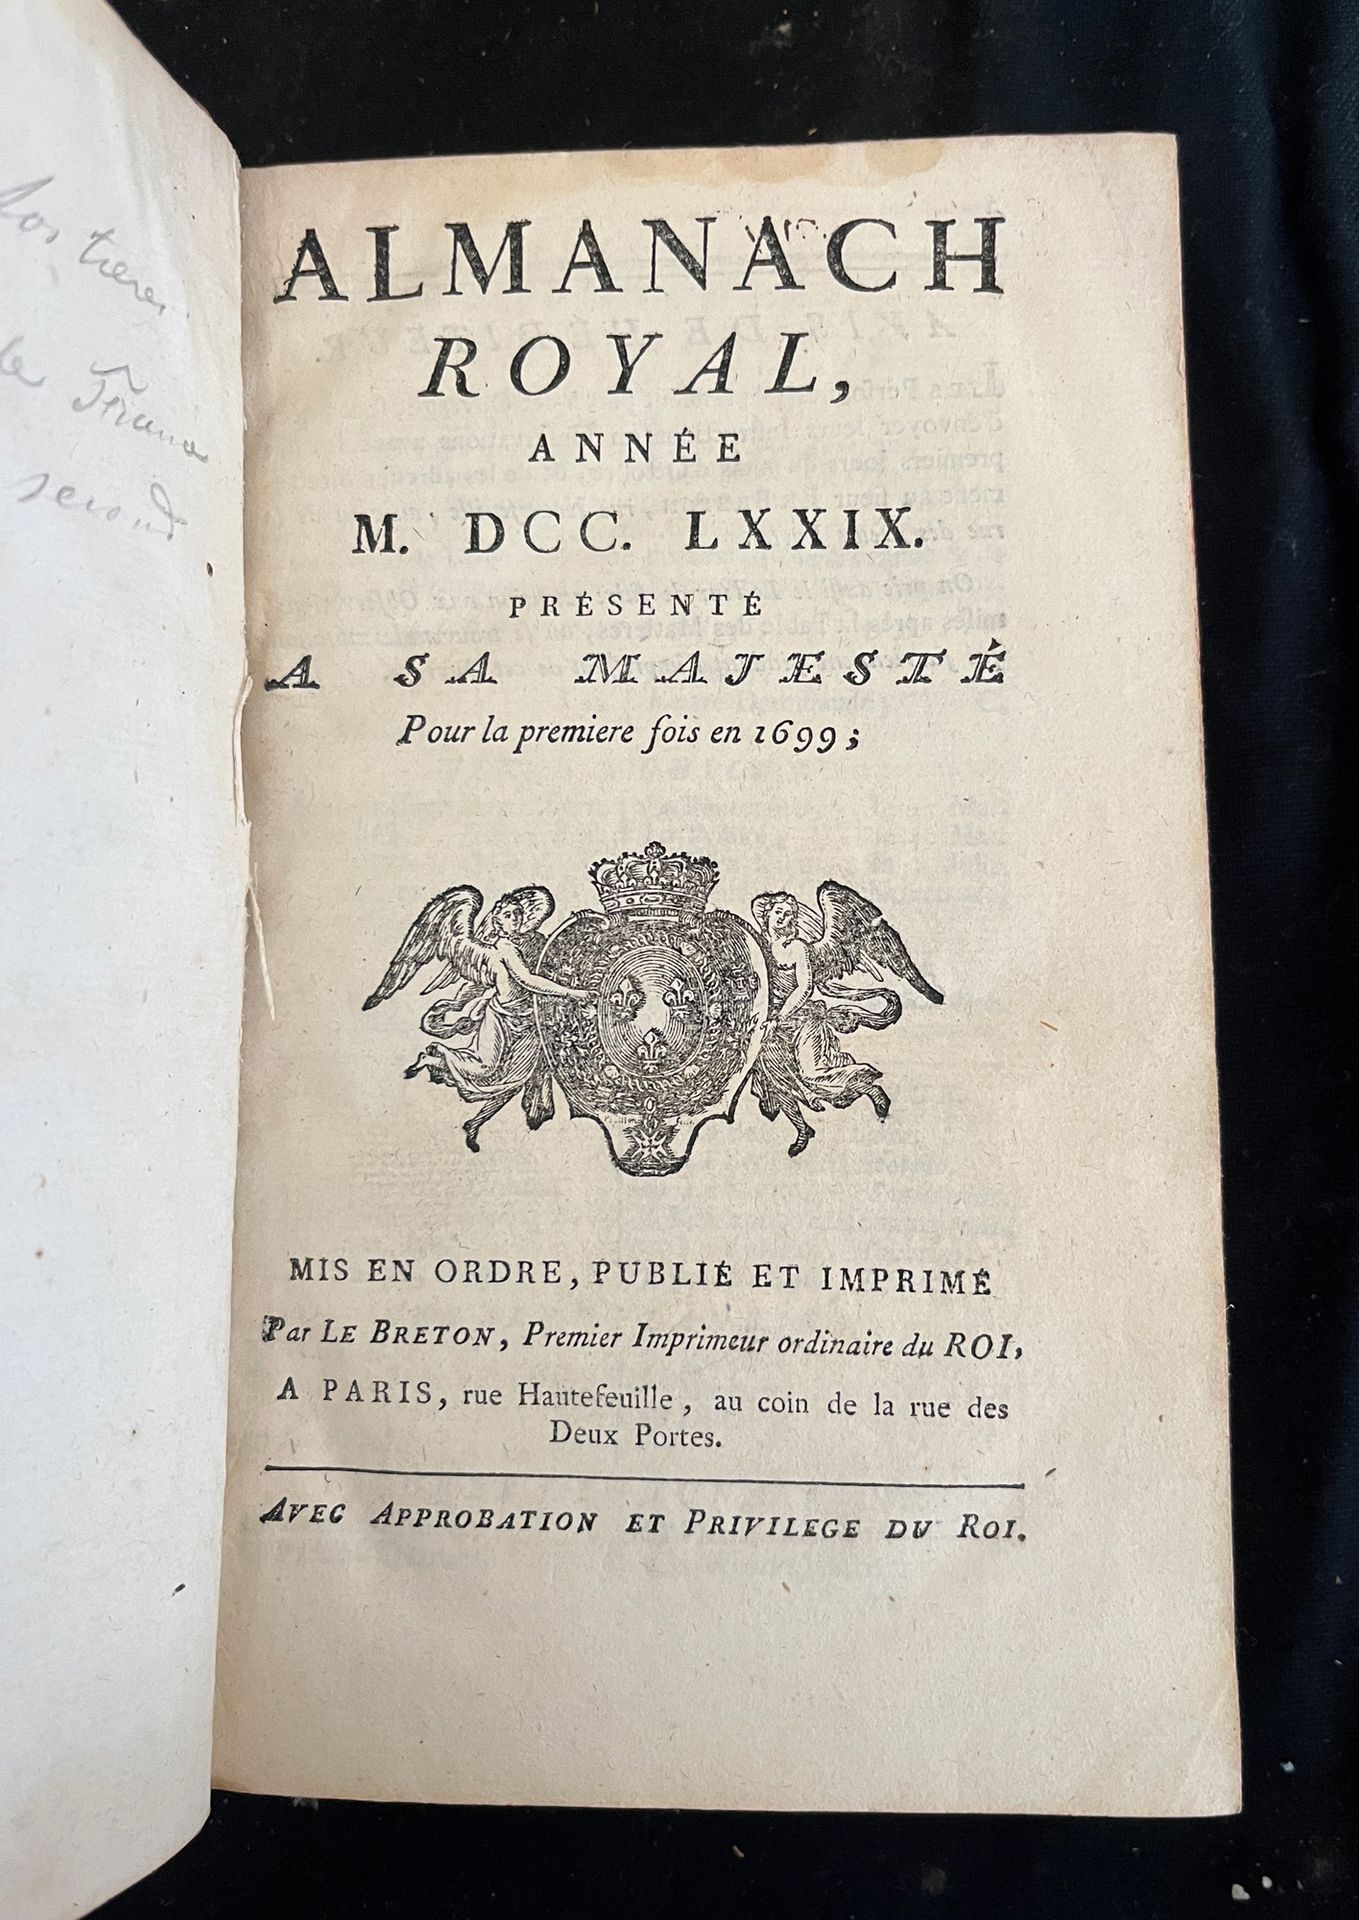 Null [ALMANACH]
Royal Almanac for the year MDCCLXXIX. Paris, chez Le Breton rue &hellip;